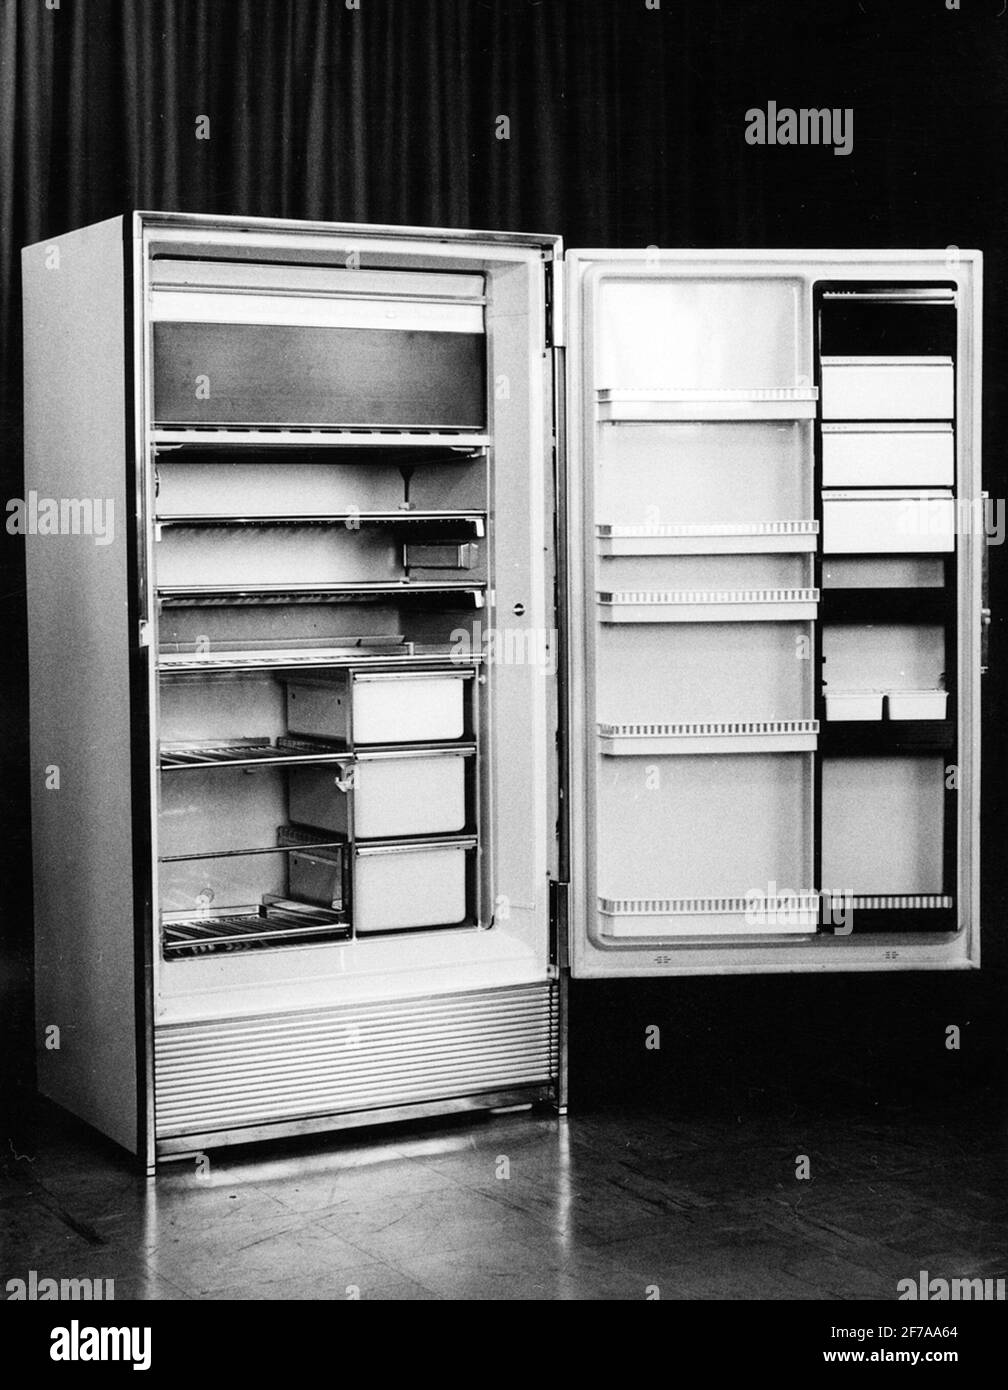 Electrolux.frigidaire. Refrigerator, open. Stock Photo